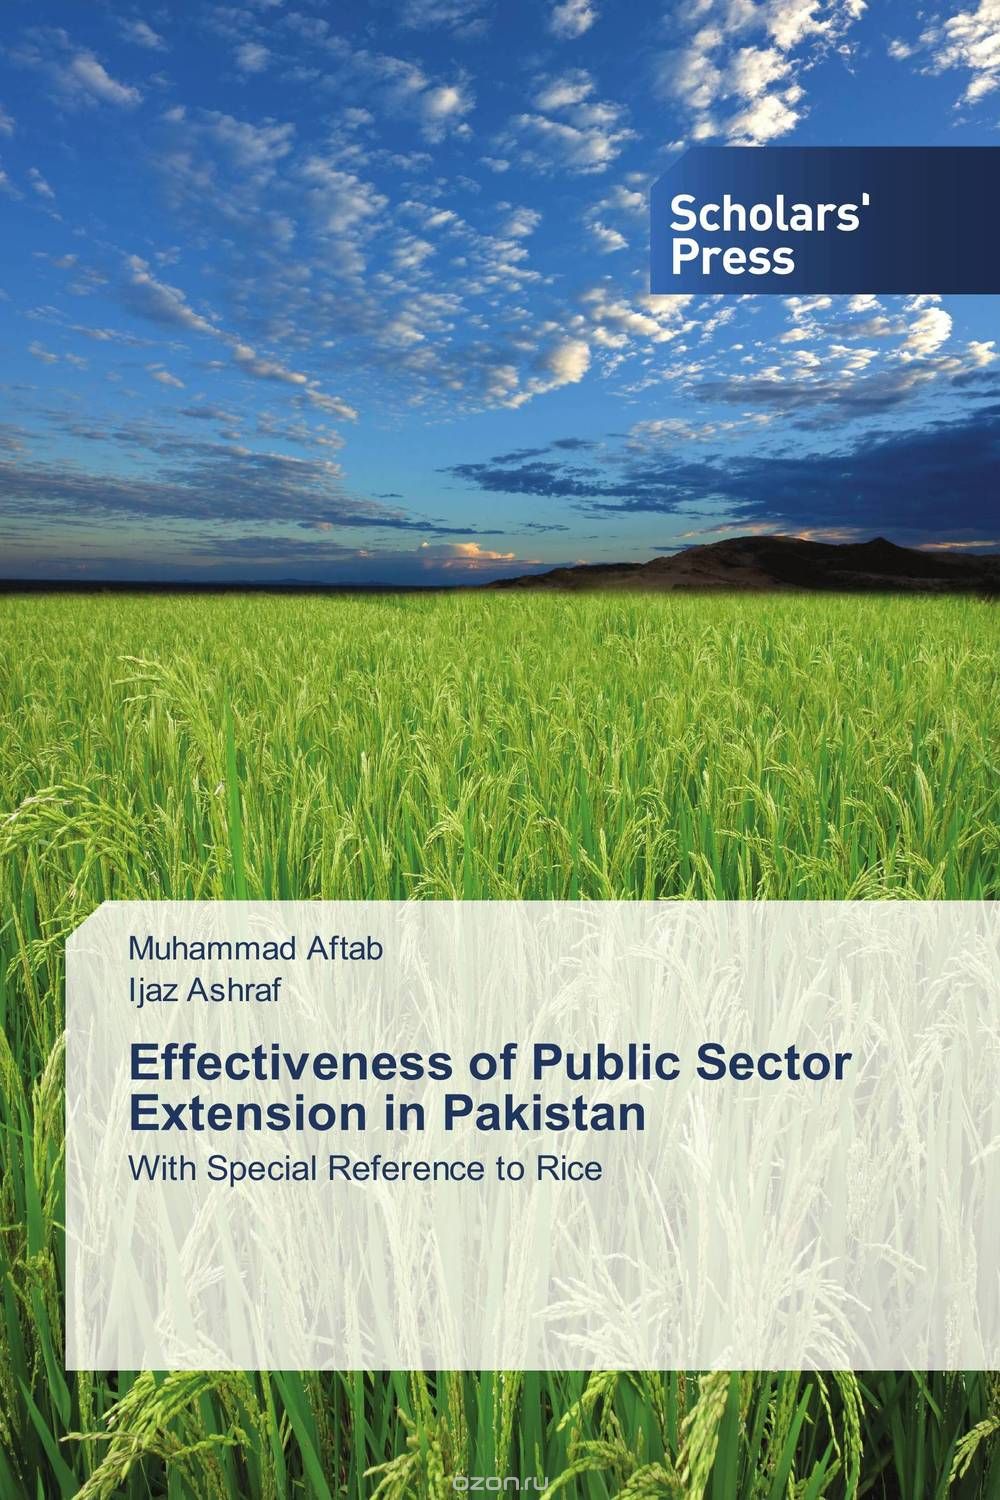 Скачать книгу "Effectiveness of Public Sector Extension in Pakistan"